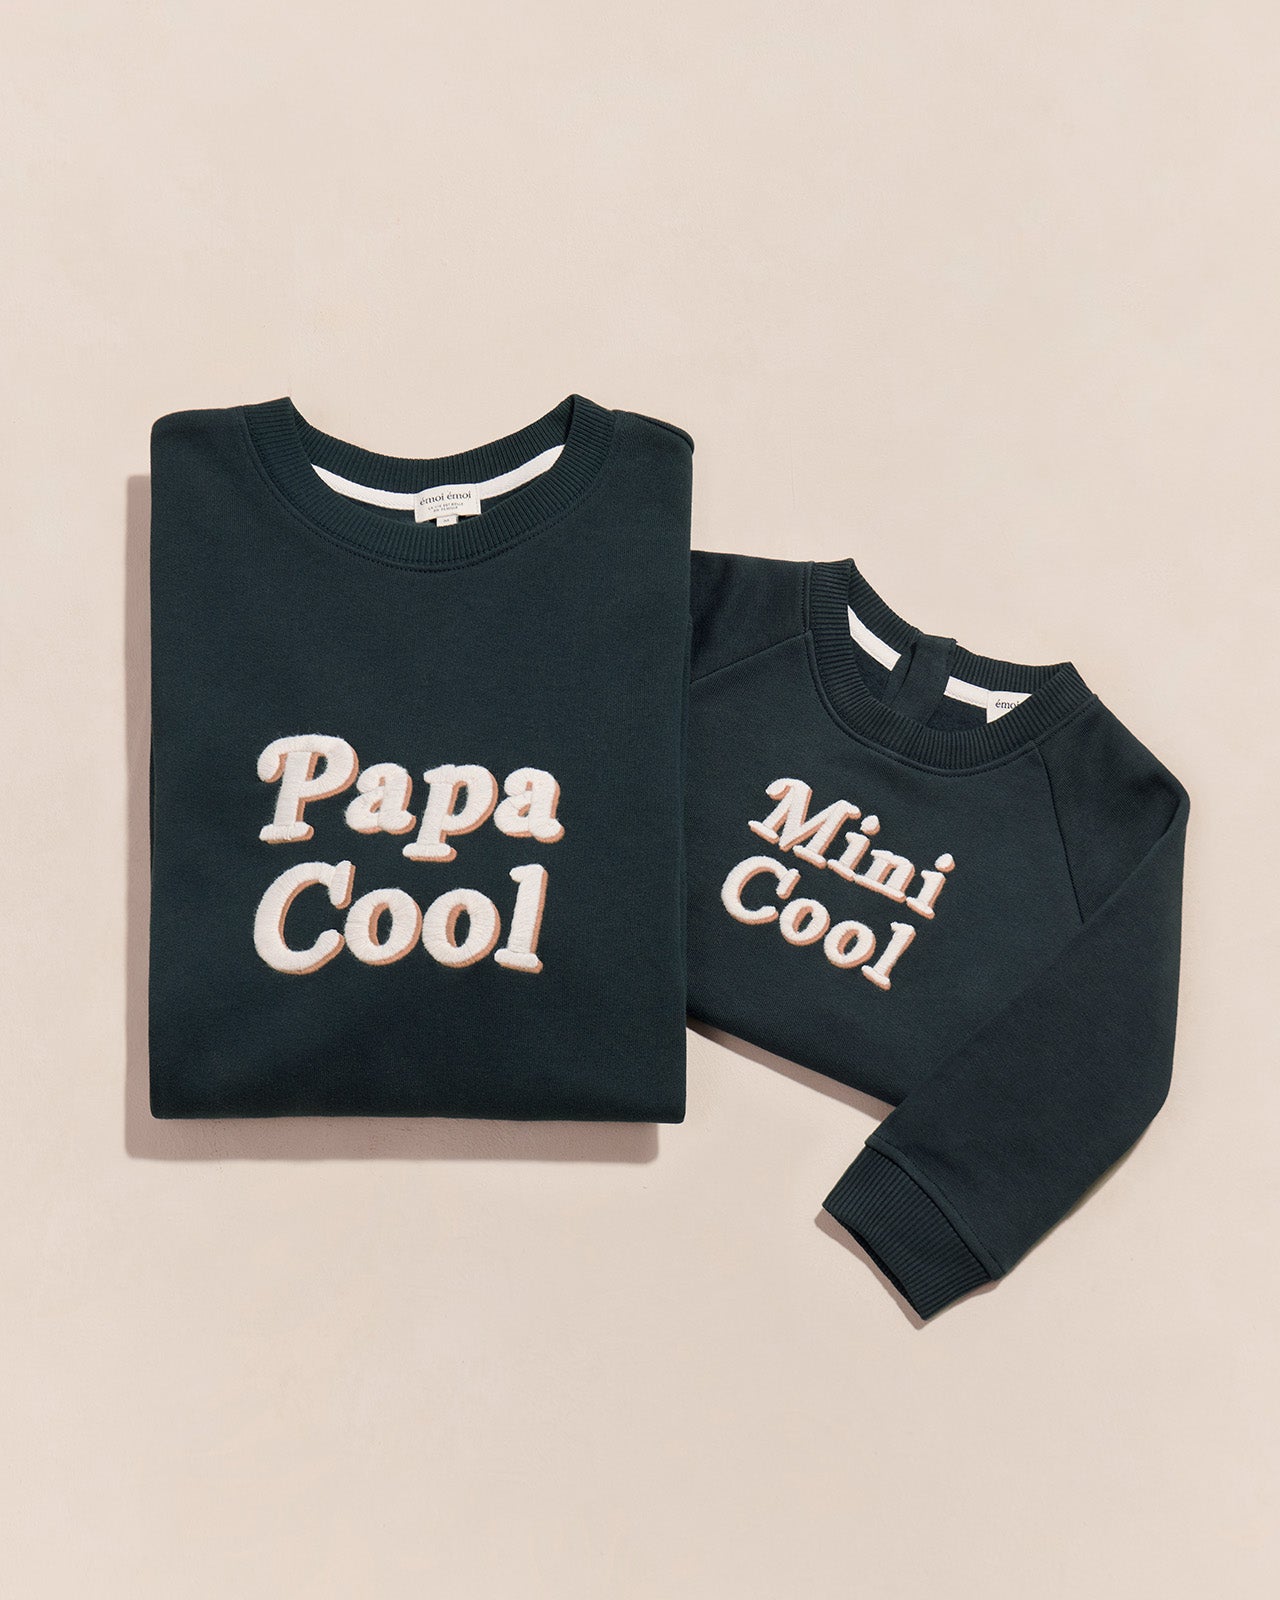 Le duo de chaussons Mama Cool x Papa Cool gris – émoi émoi